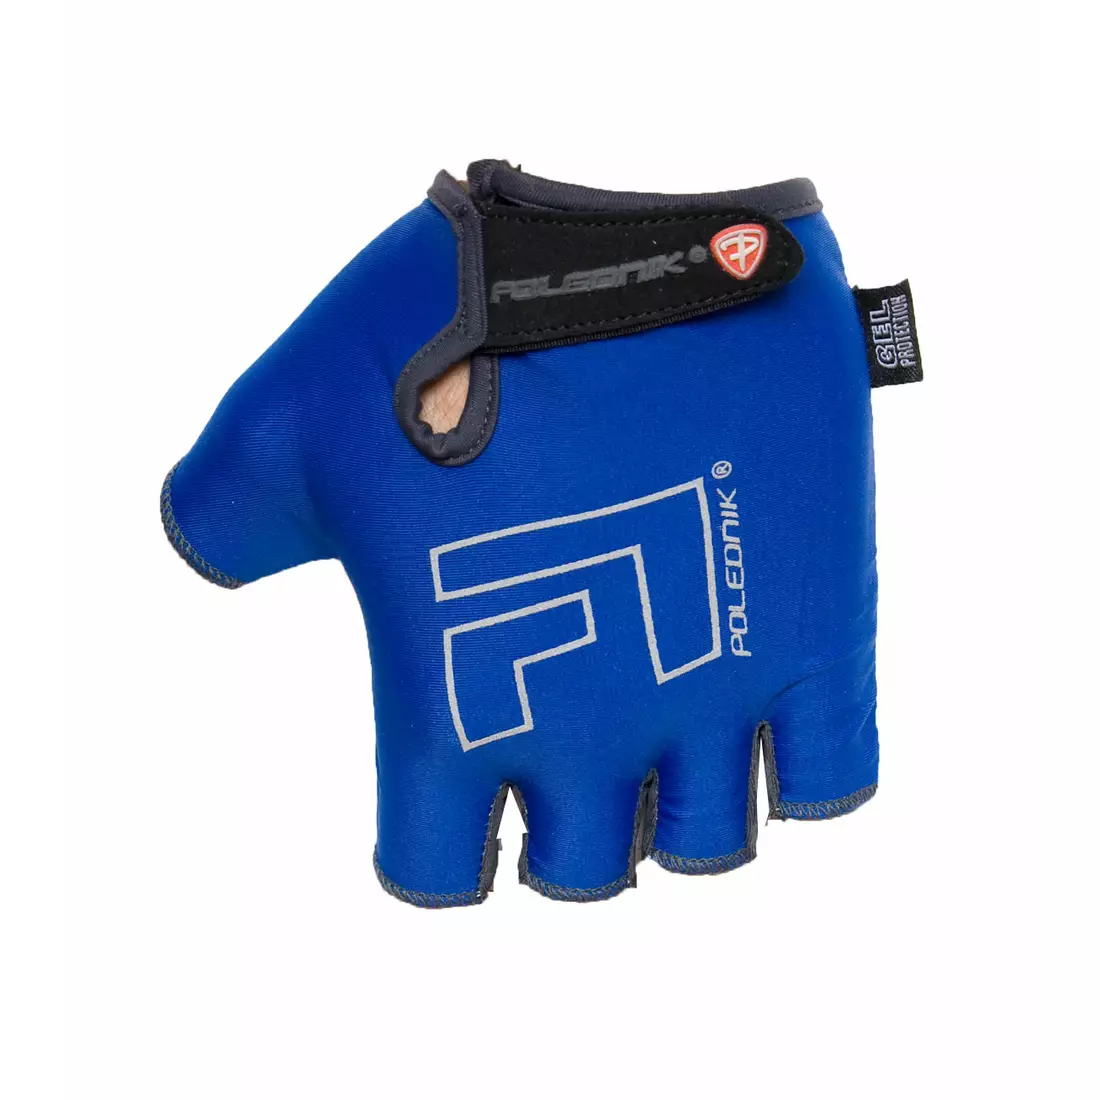 POLEDNIK F1 NEW14 cycling gloves blue